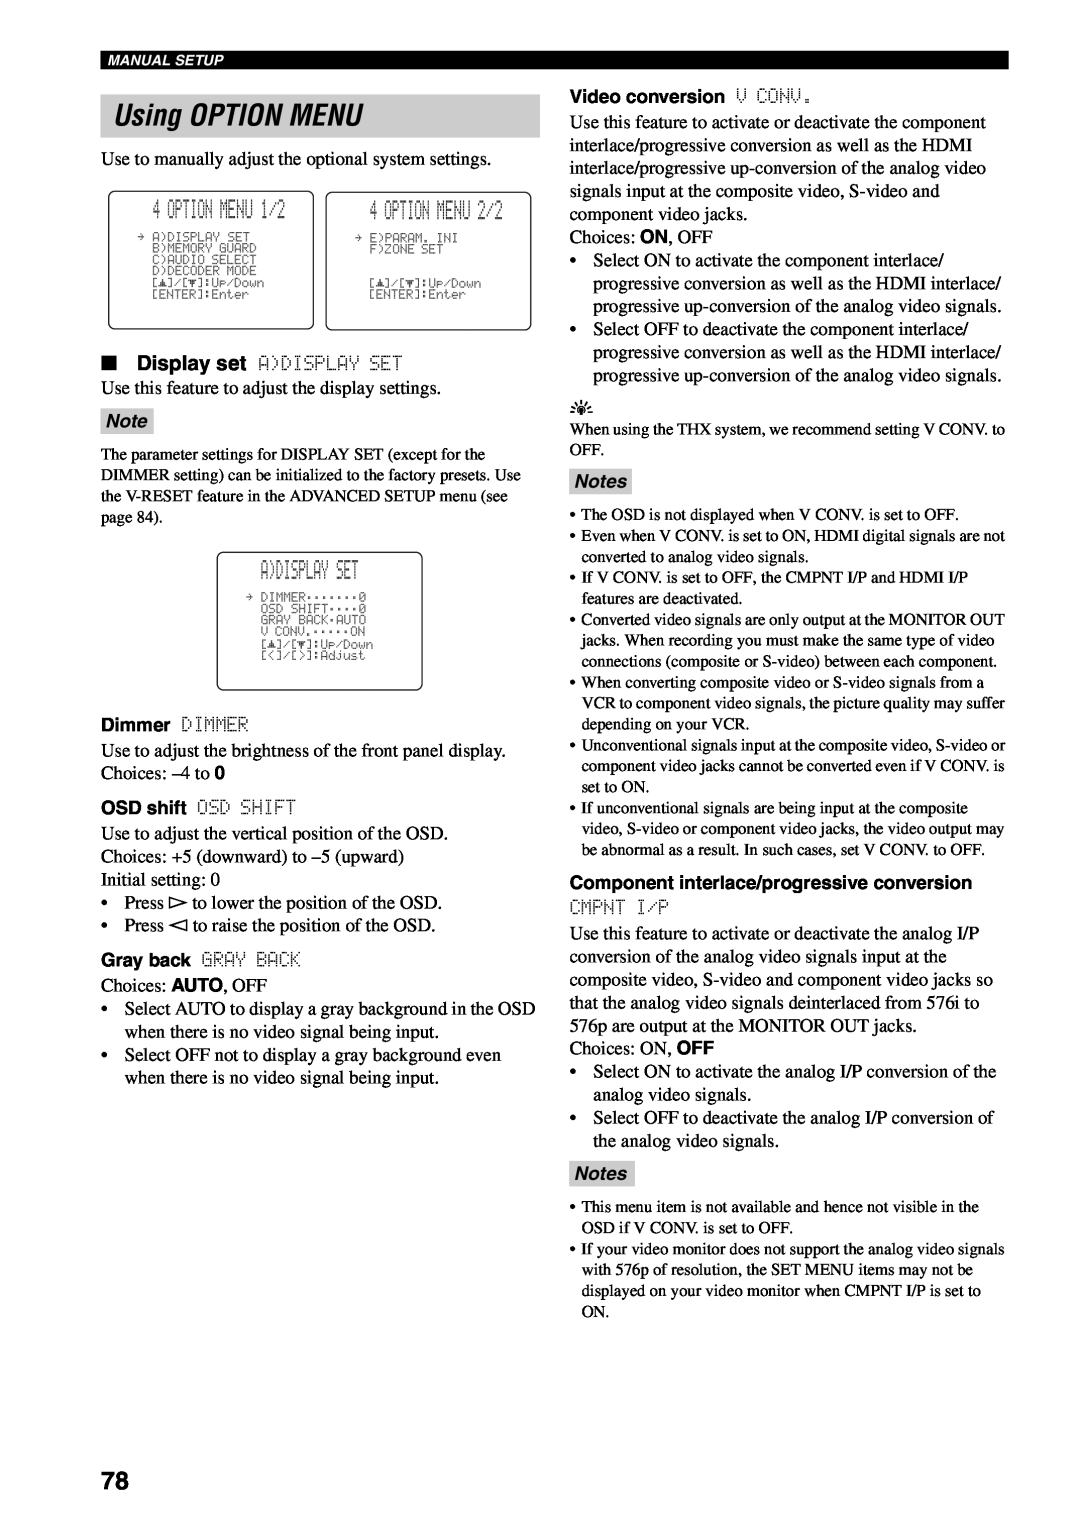 Yamaha RX-V1600 owner manual Using OPTION MENU, Adisplay Set, OPTION MENU 1/2, Notes 